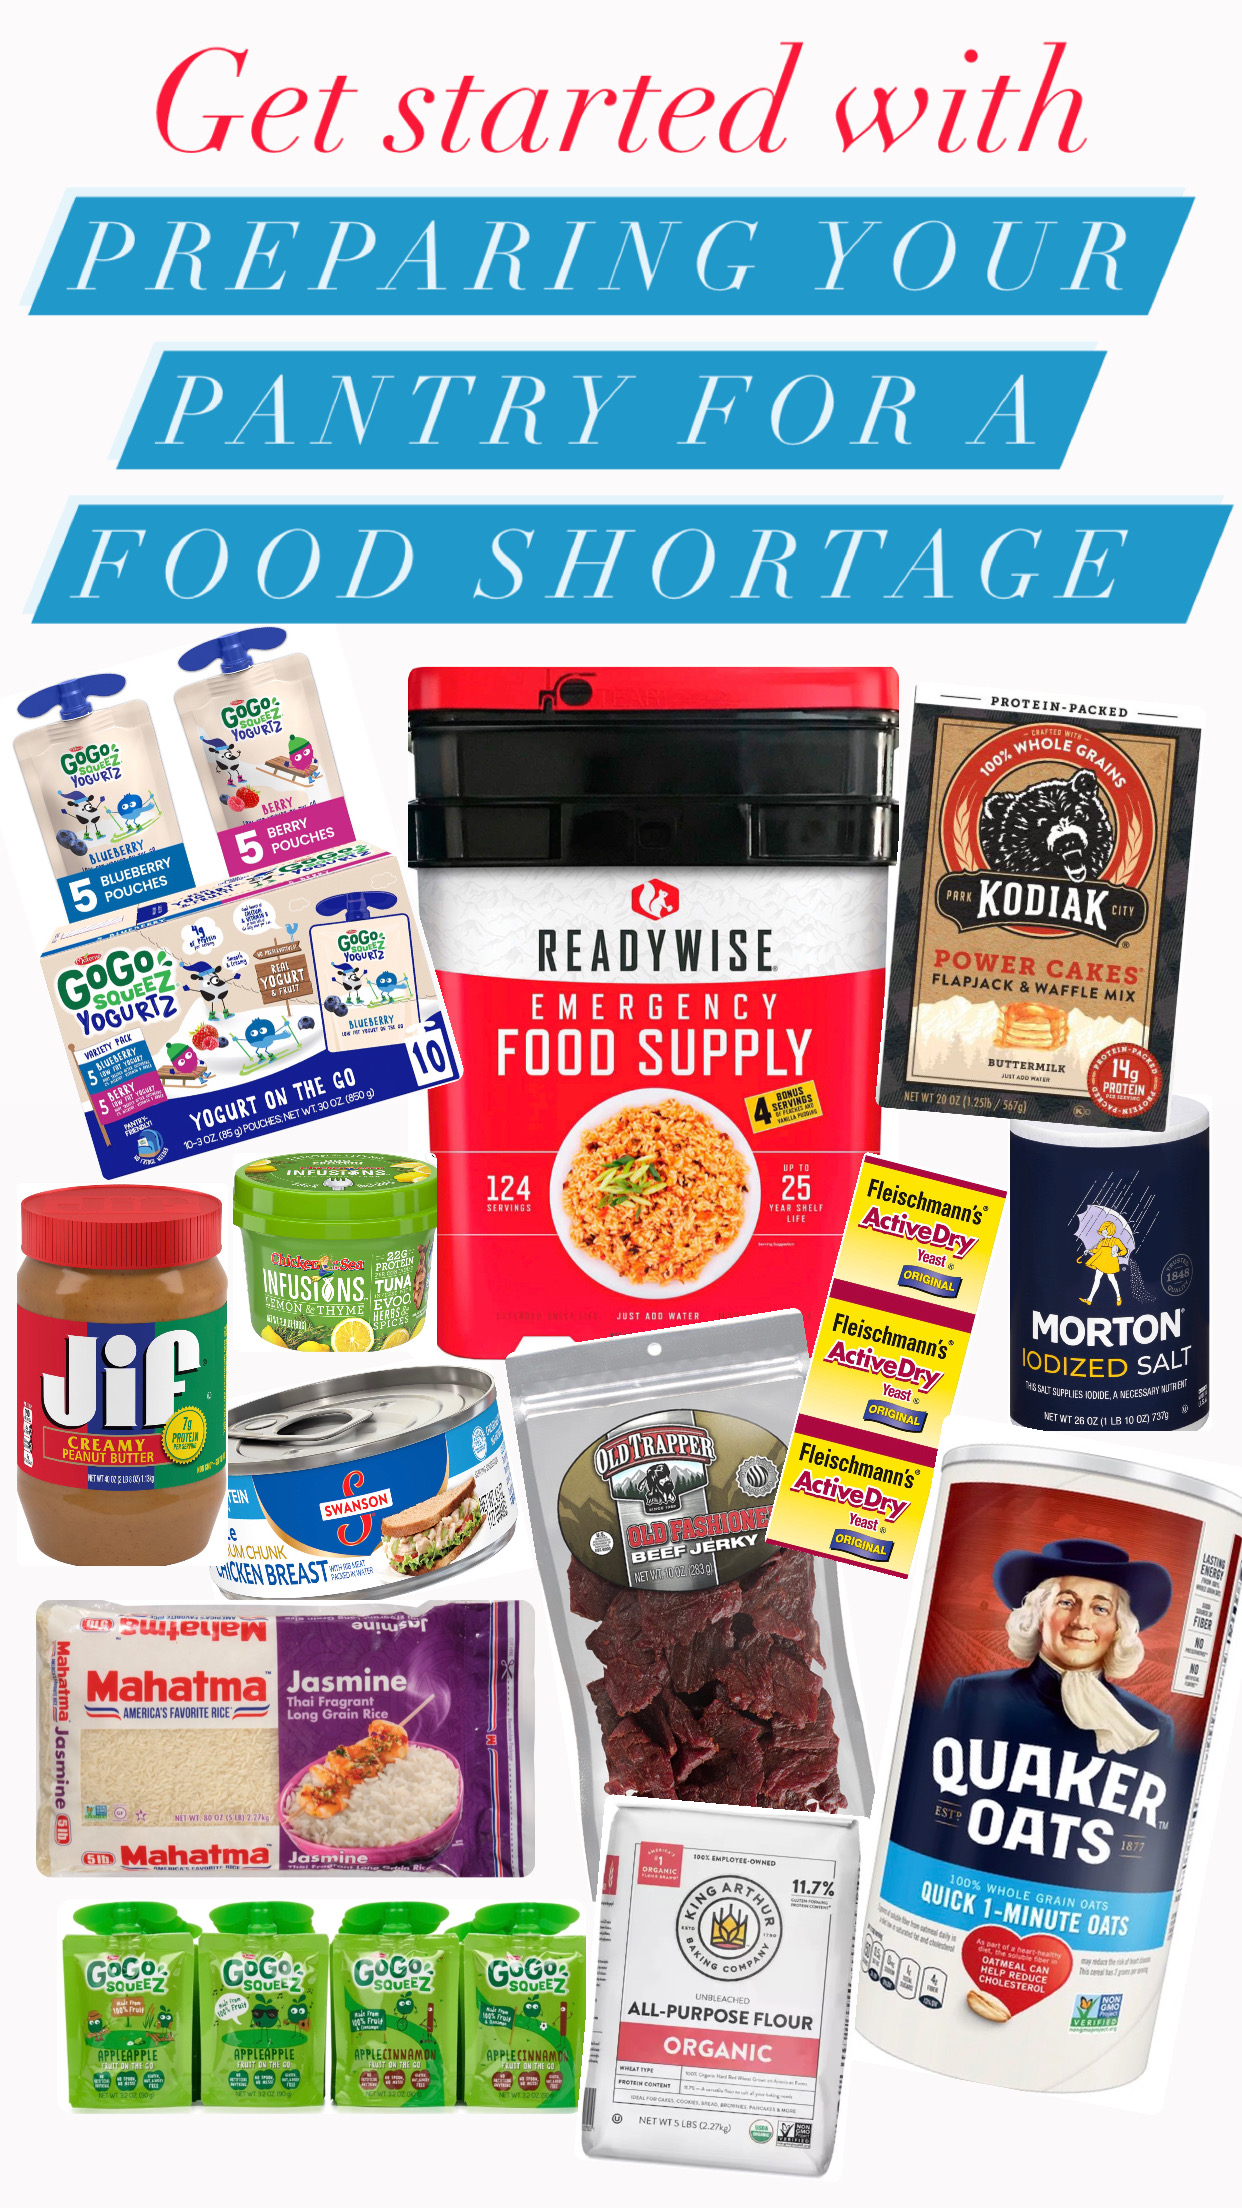 Easy Food Storage Preparedness Ideas